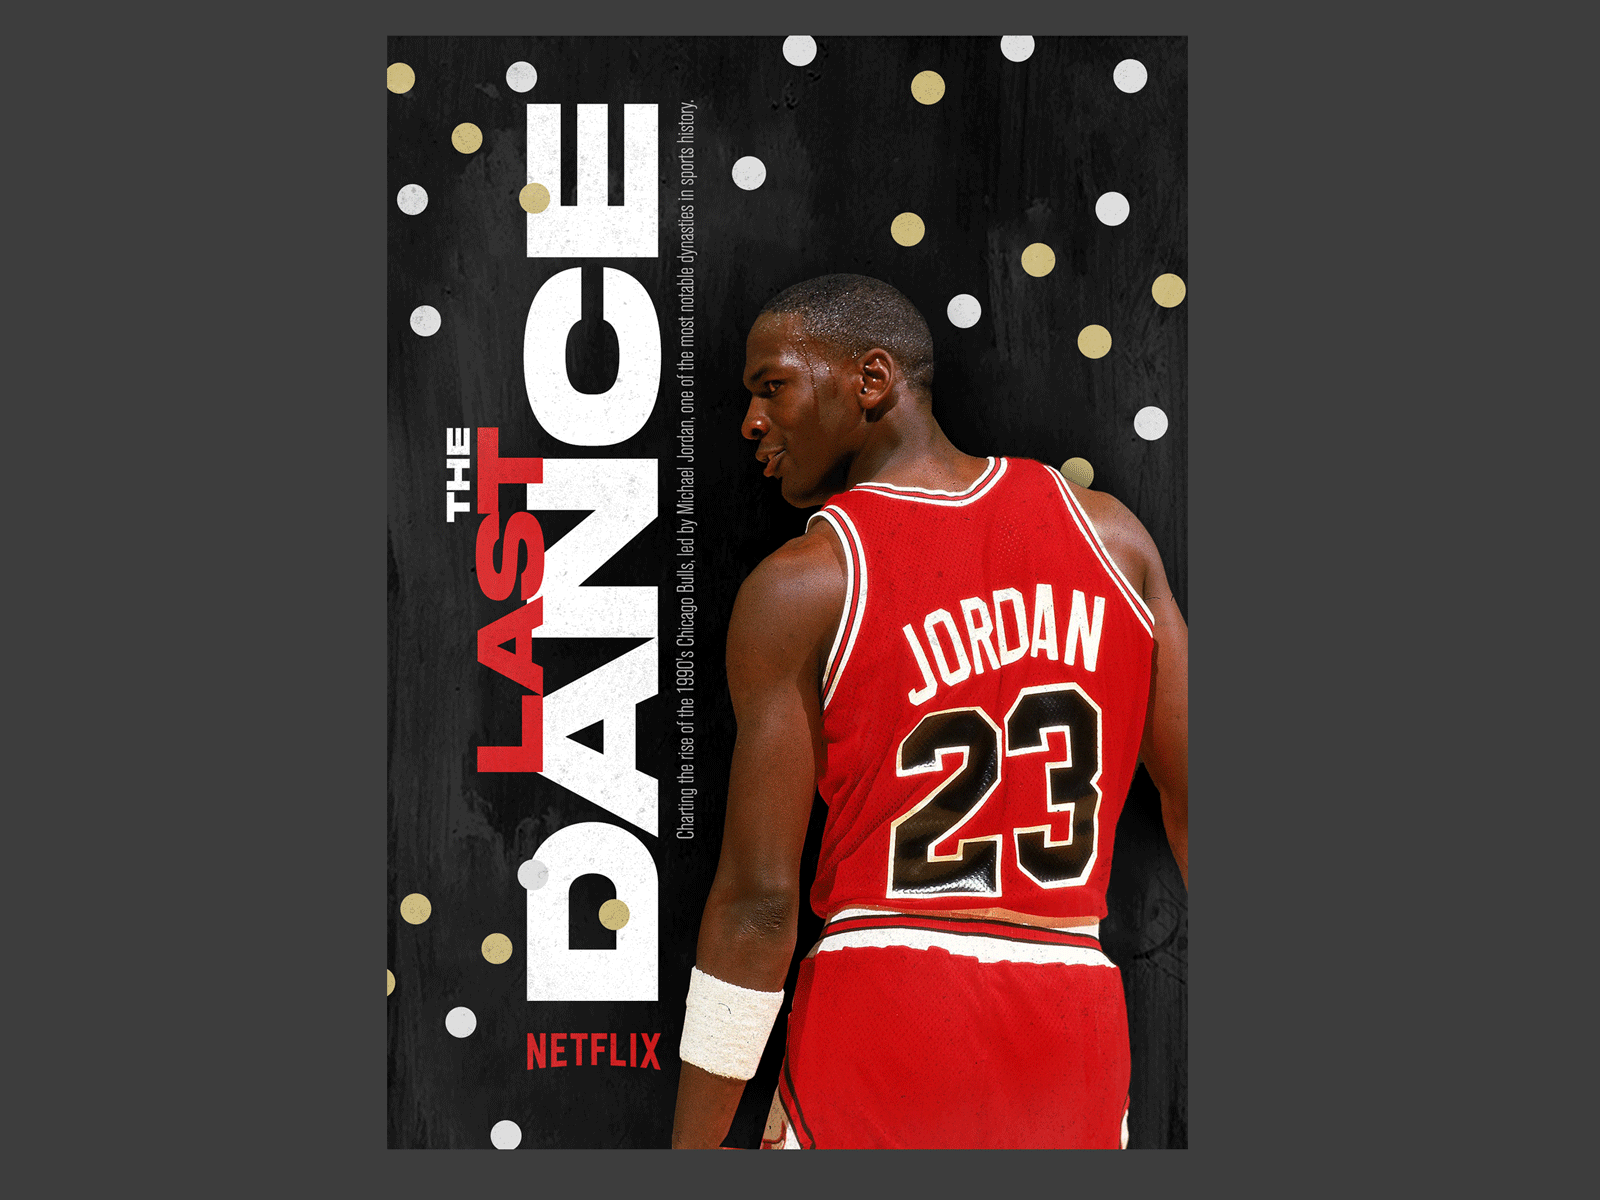 The Last Dance Poster | My tribute to MJ airjordan concept design jordan nba poster poster art typography